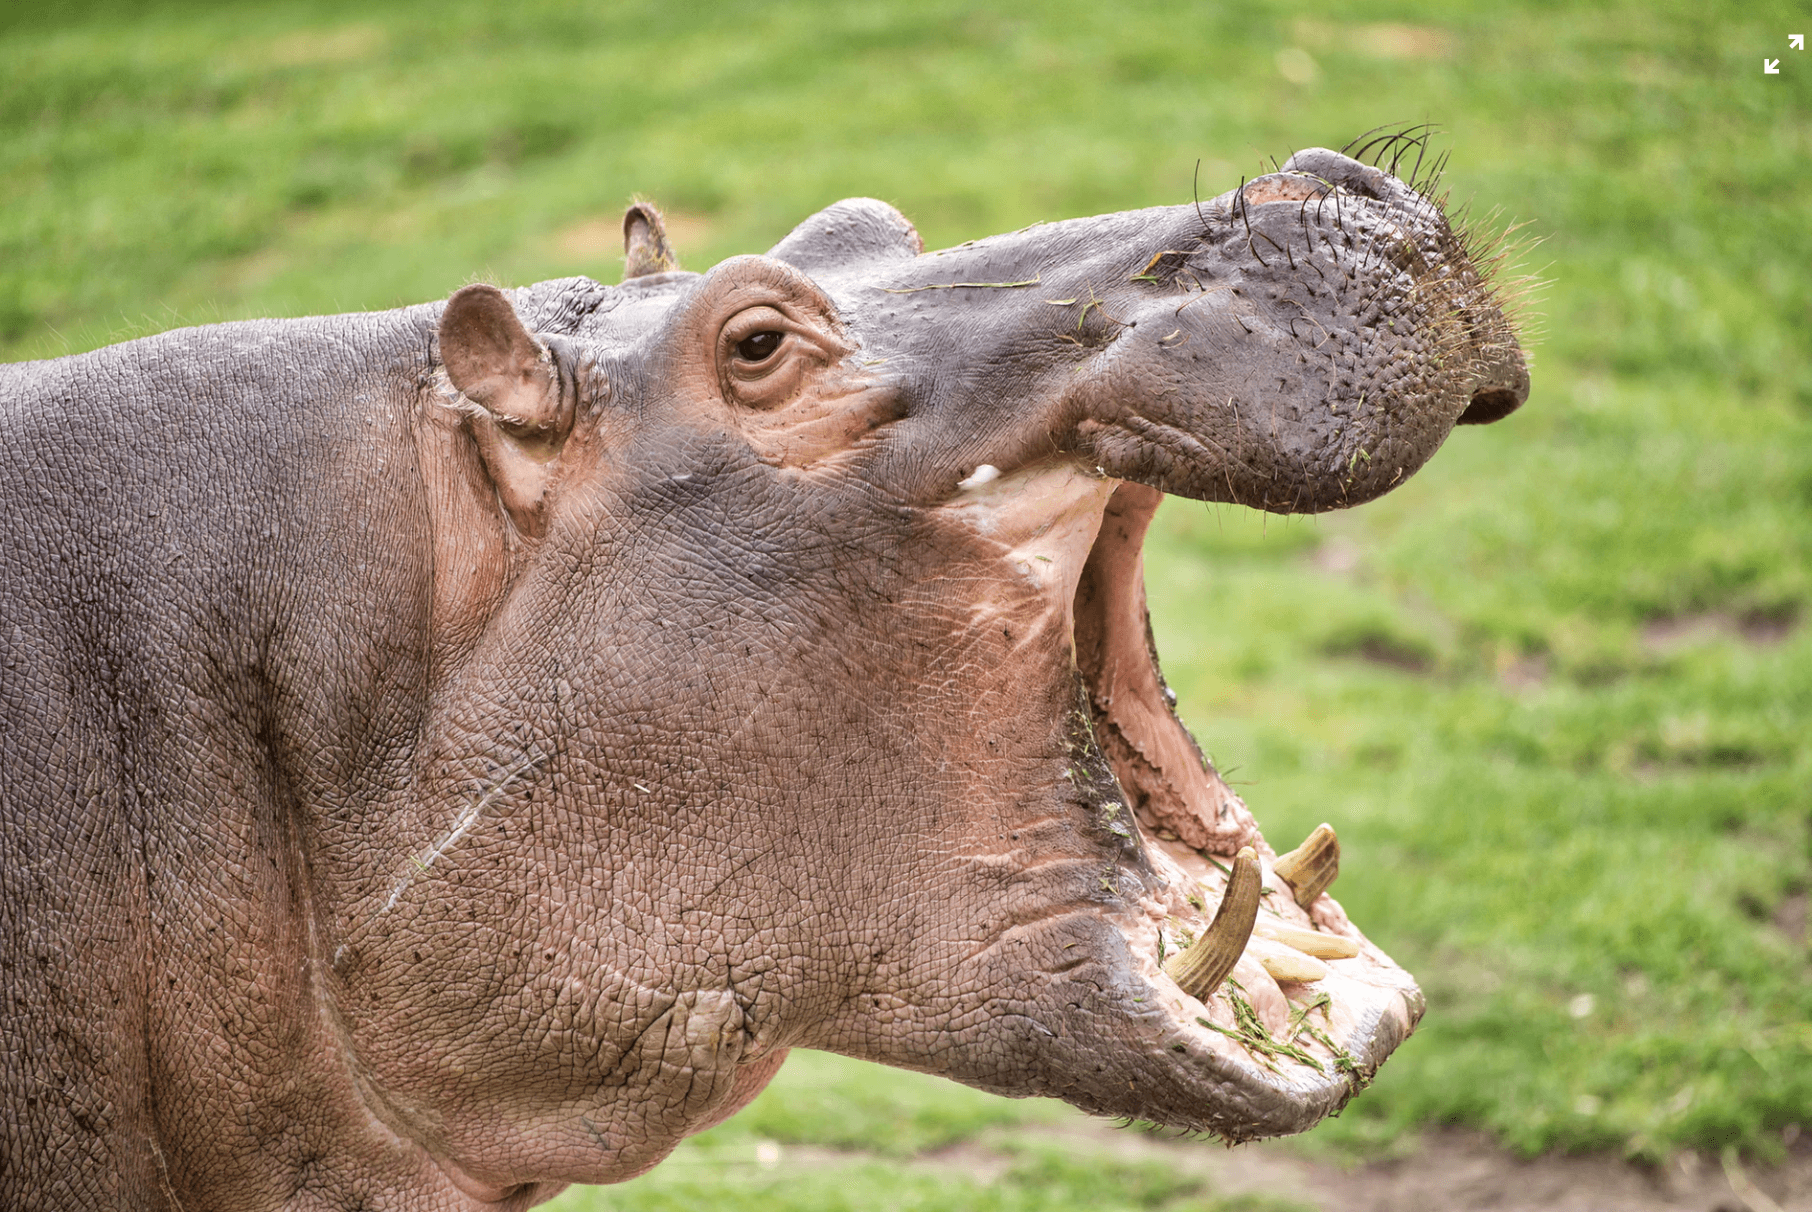 A hippo yawning